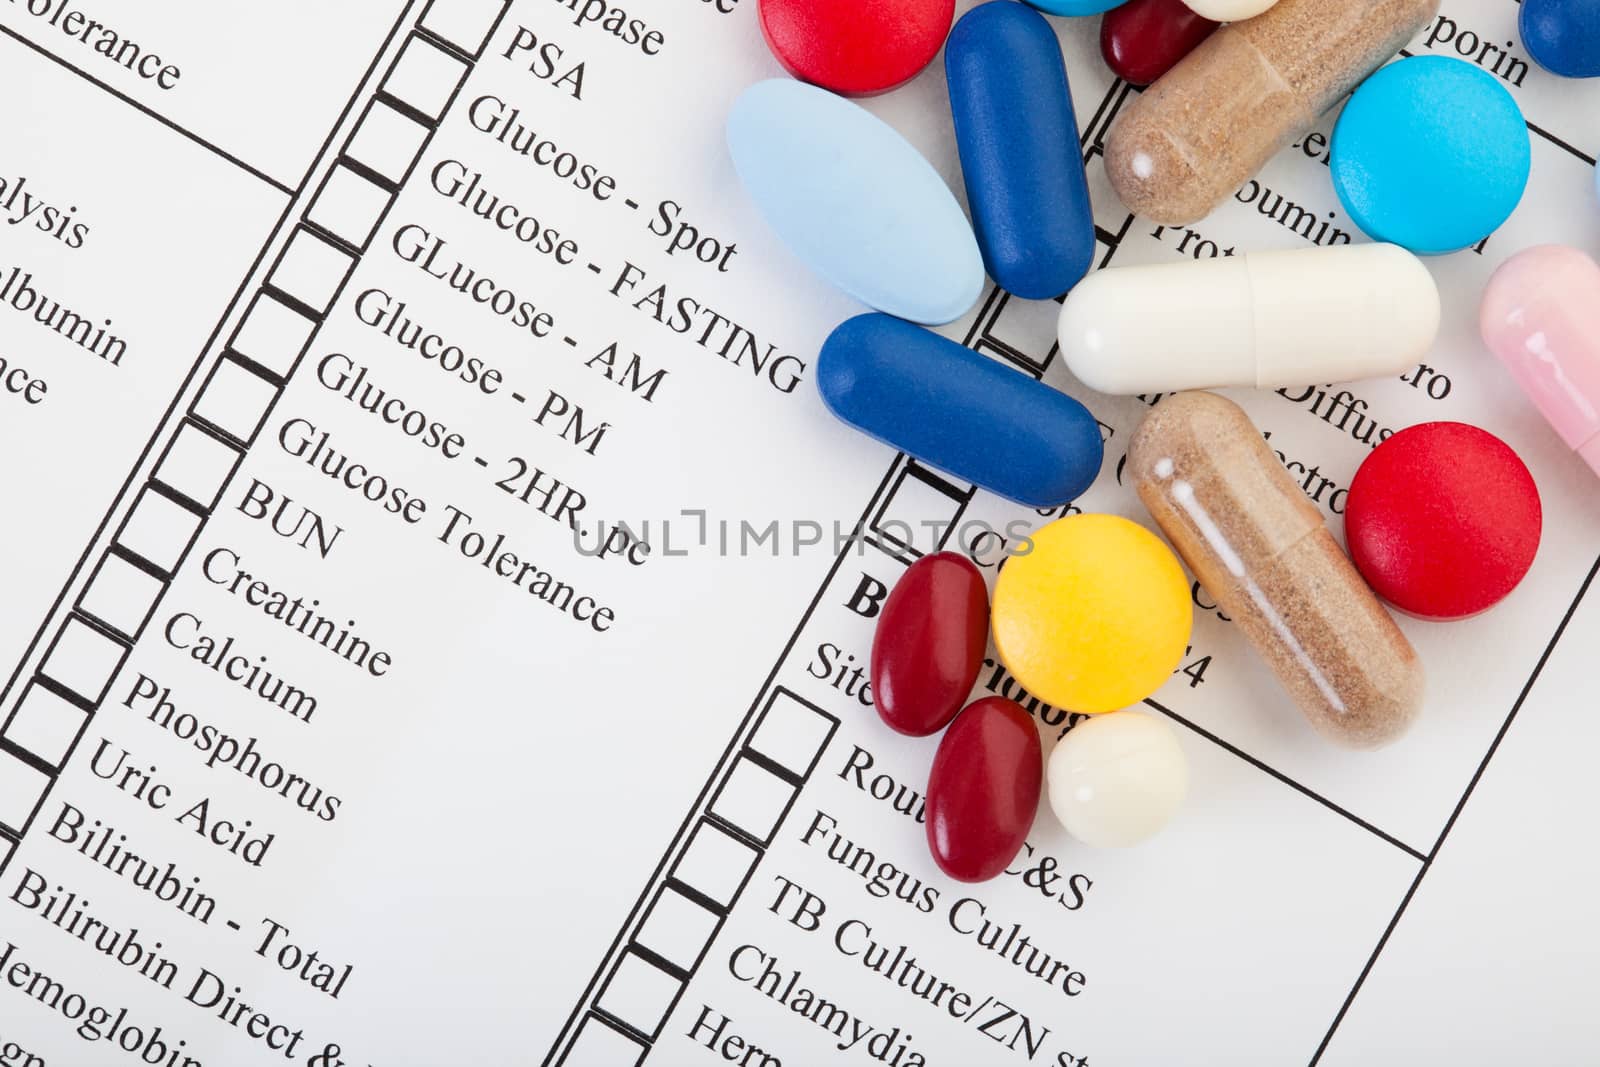 A variety of pills on a laboratory diagnostics form.